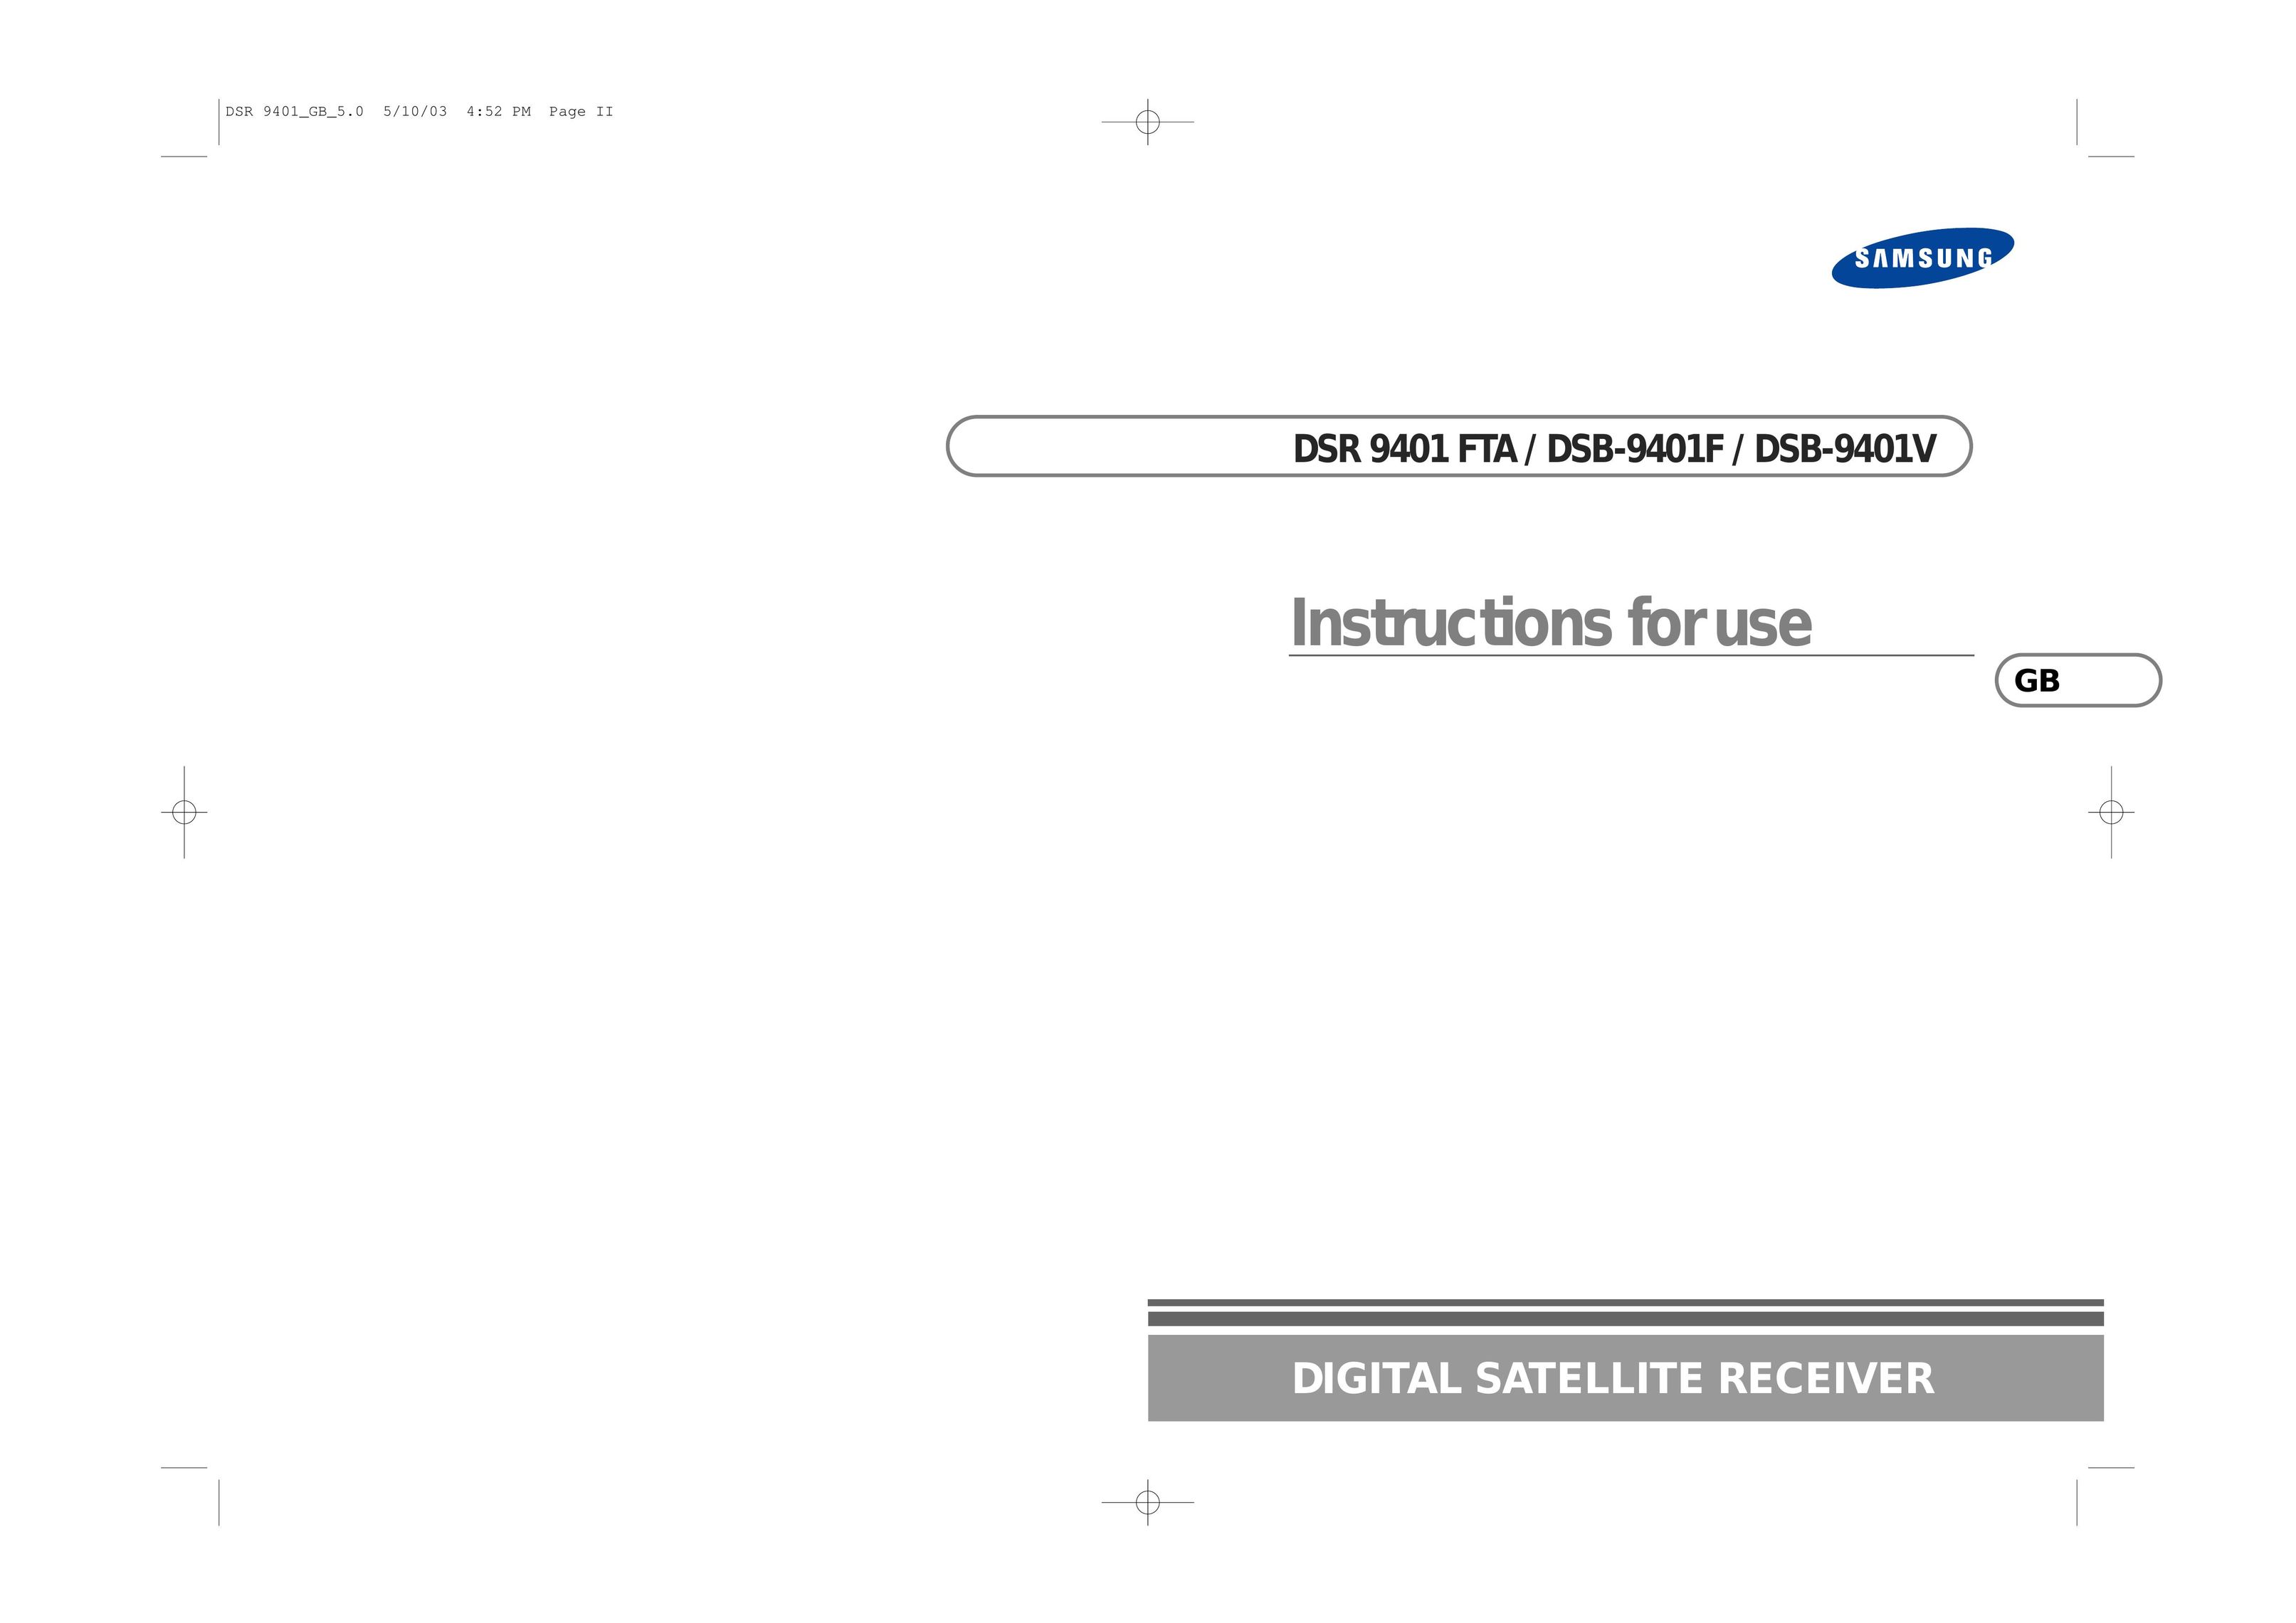 Samsung DSR 9401 FTA Car Satellite Radio System User Manual